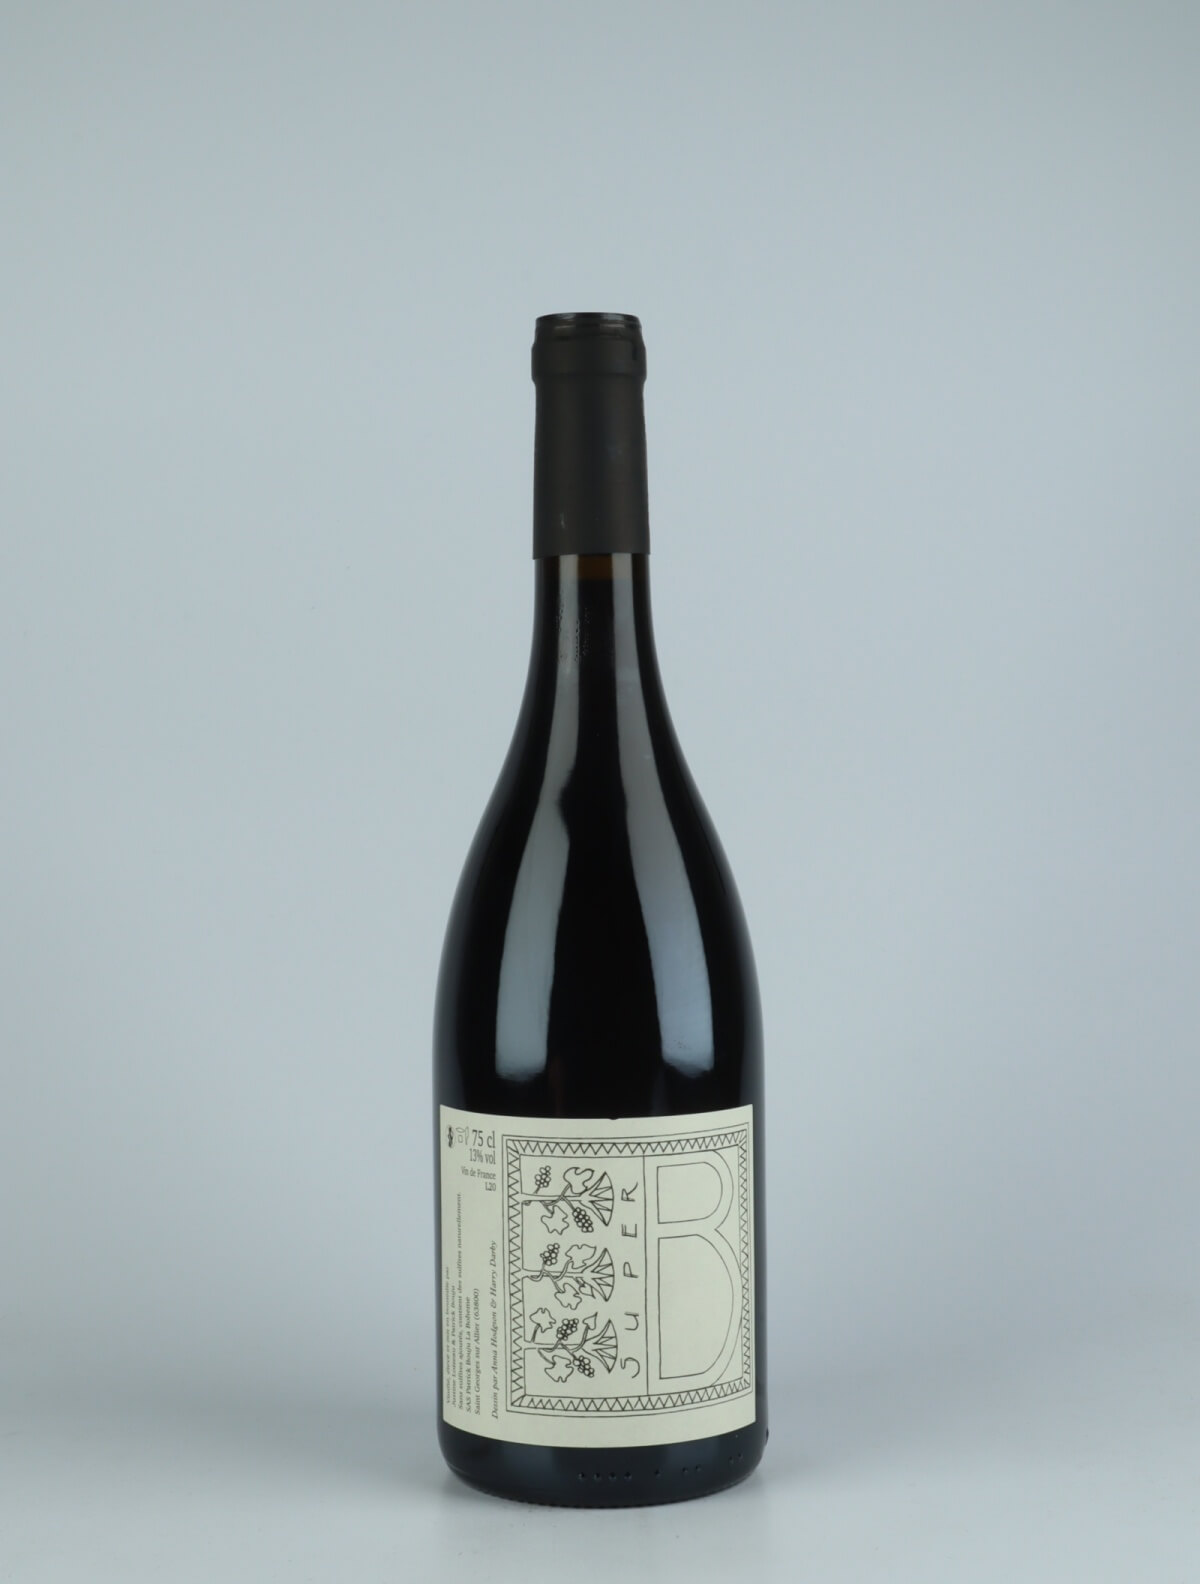 A bottle 2020 Super B Red wine from Patrick Bouju, Auvergne in France